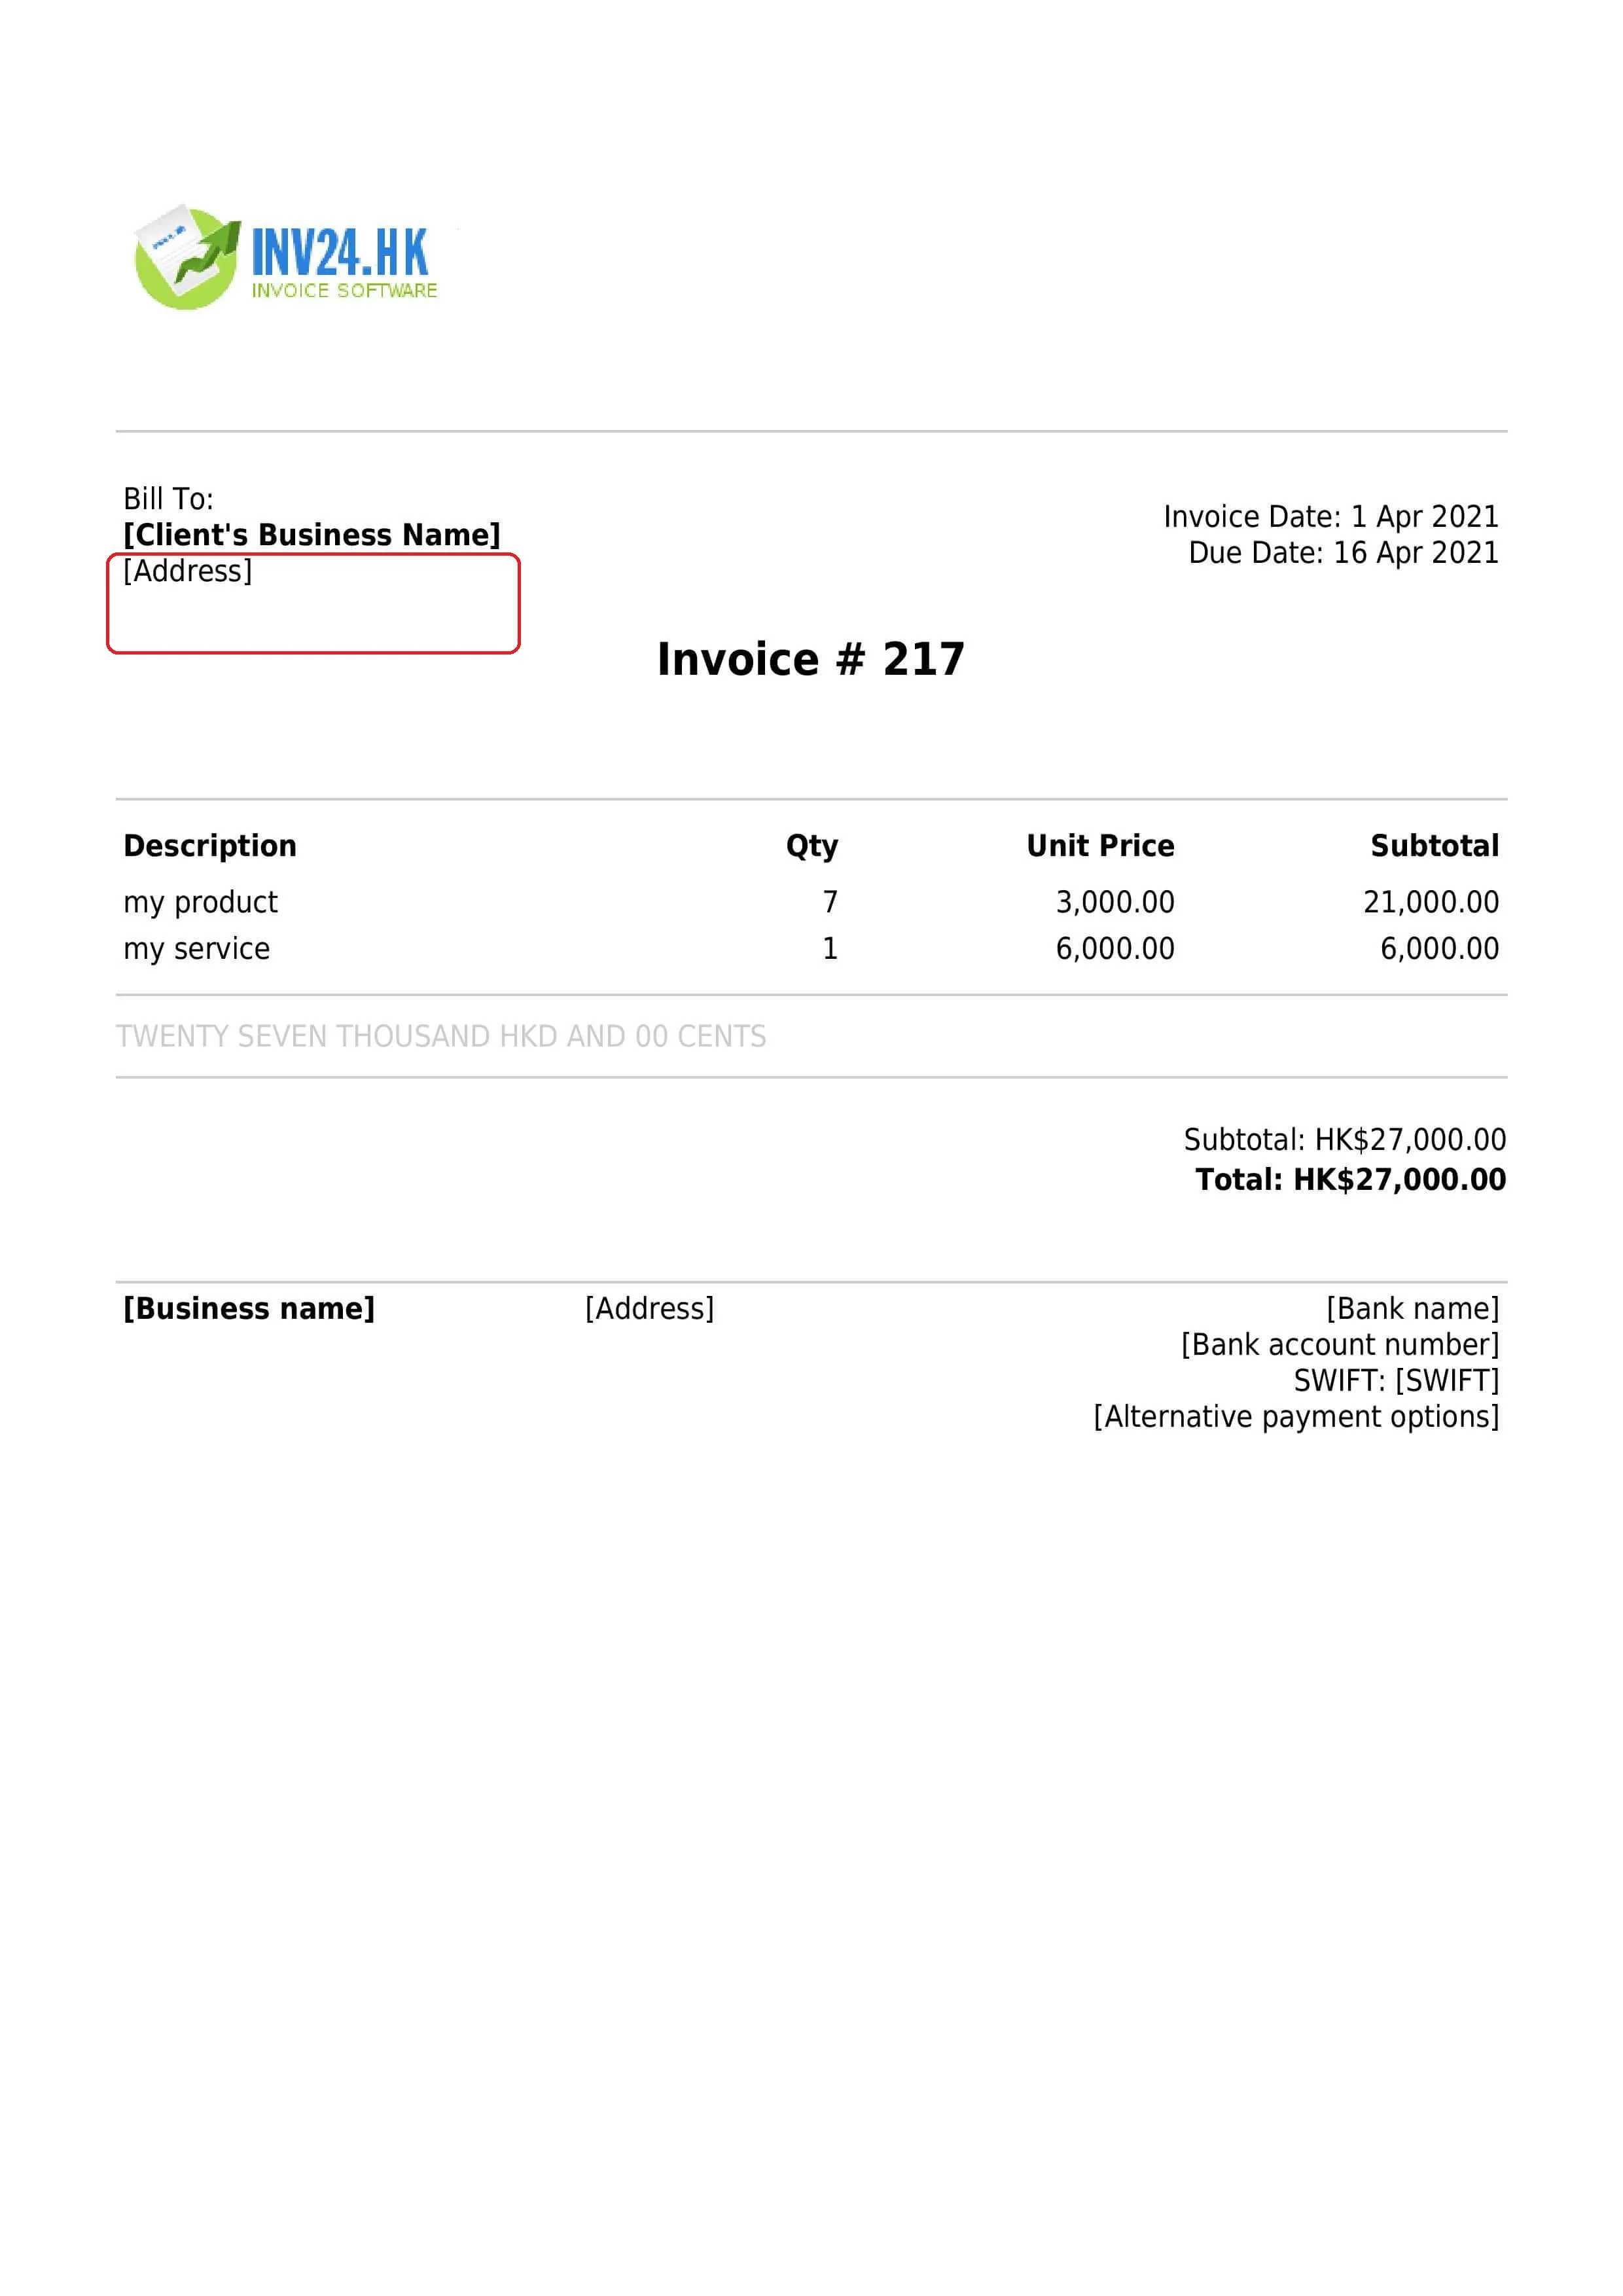 invoice customer's business address